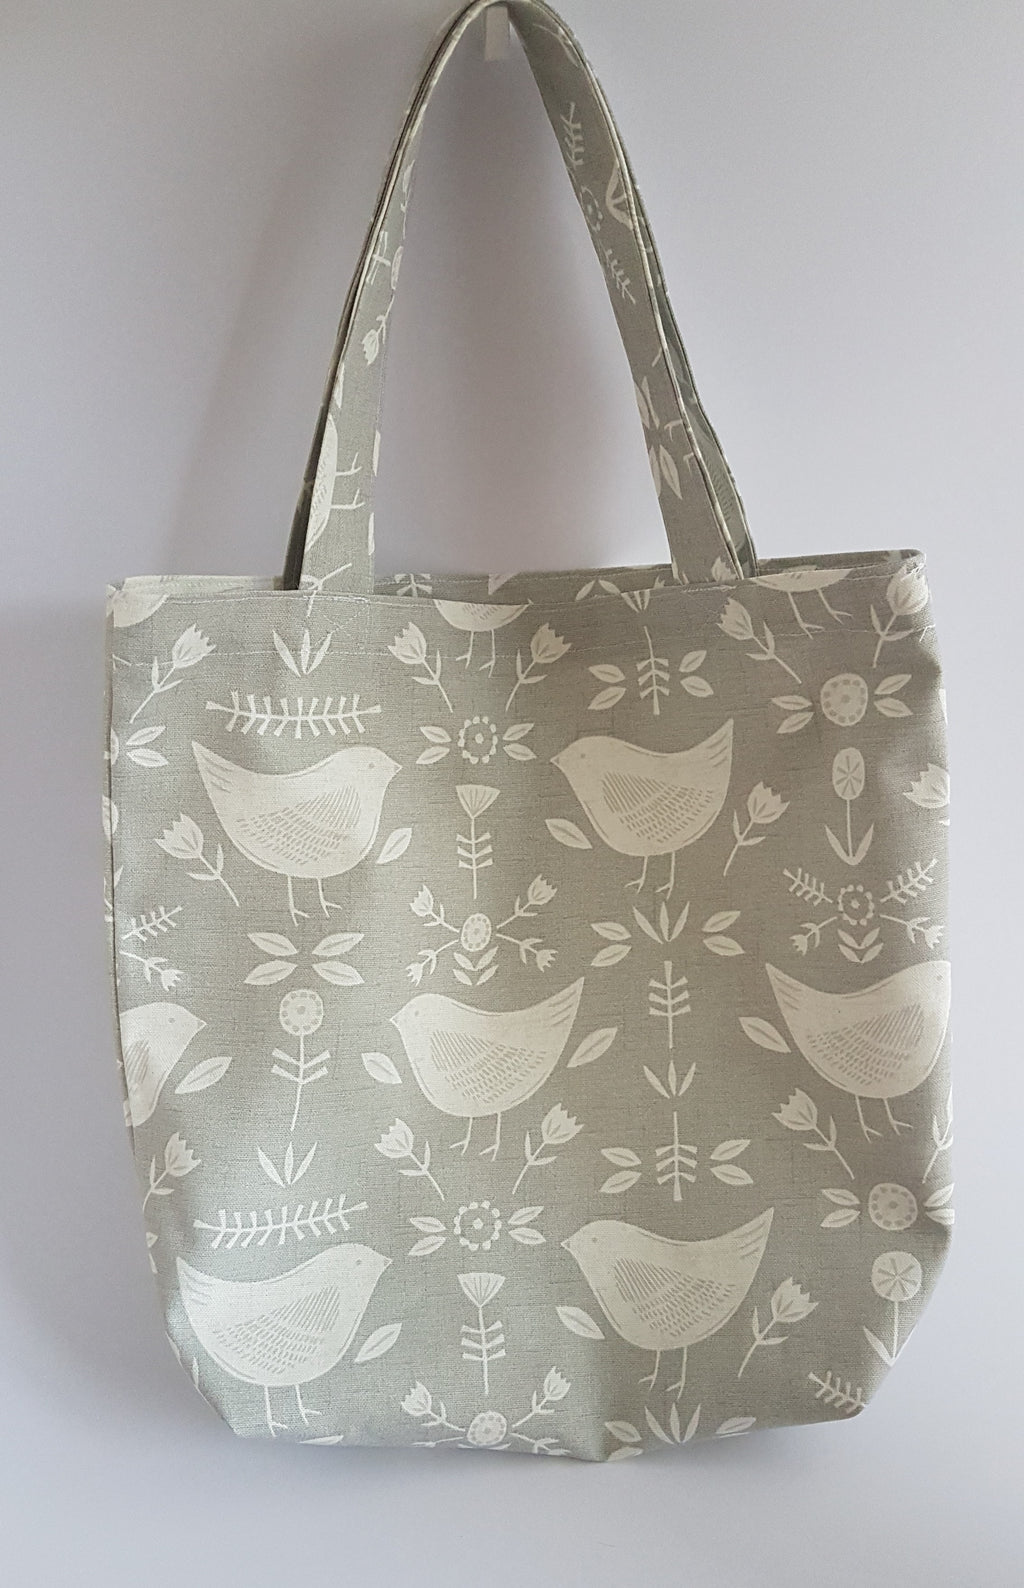 Bird pattern tote bag in grey